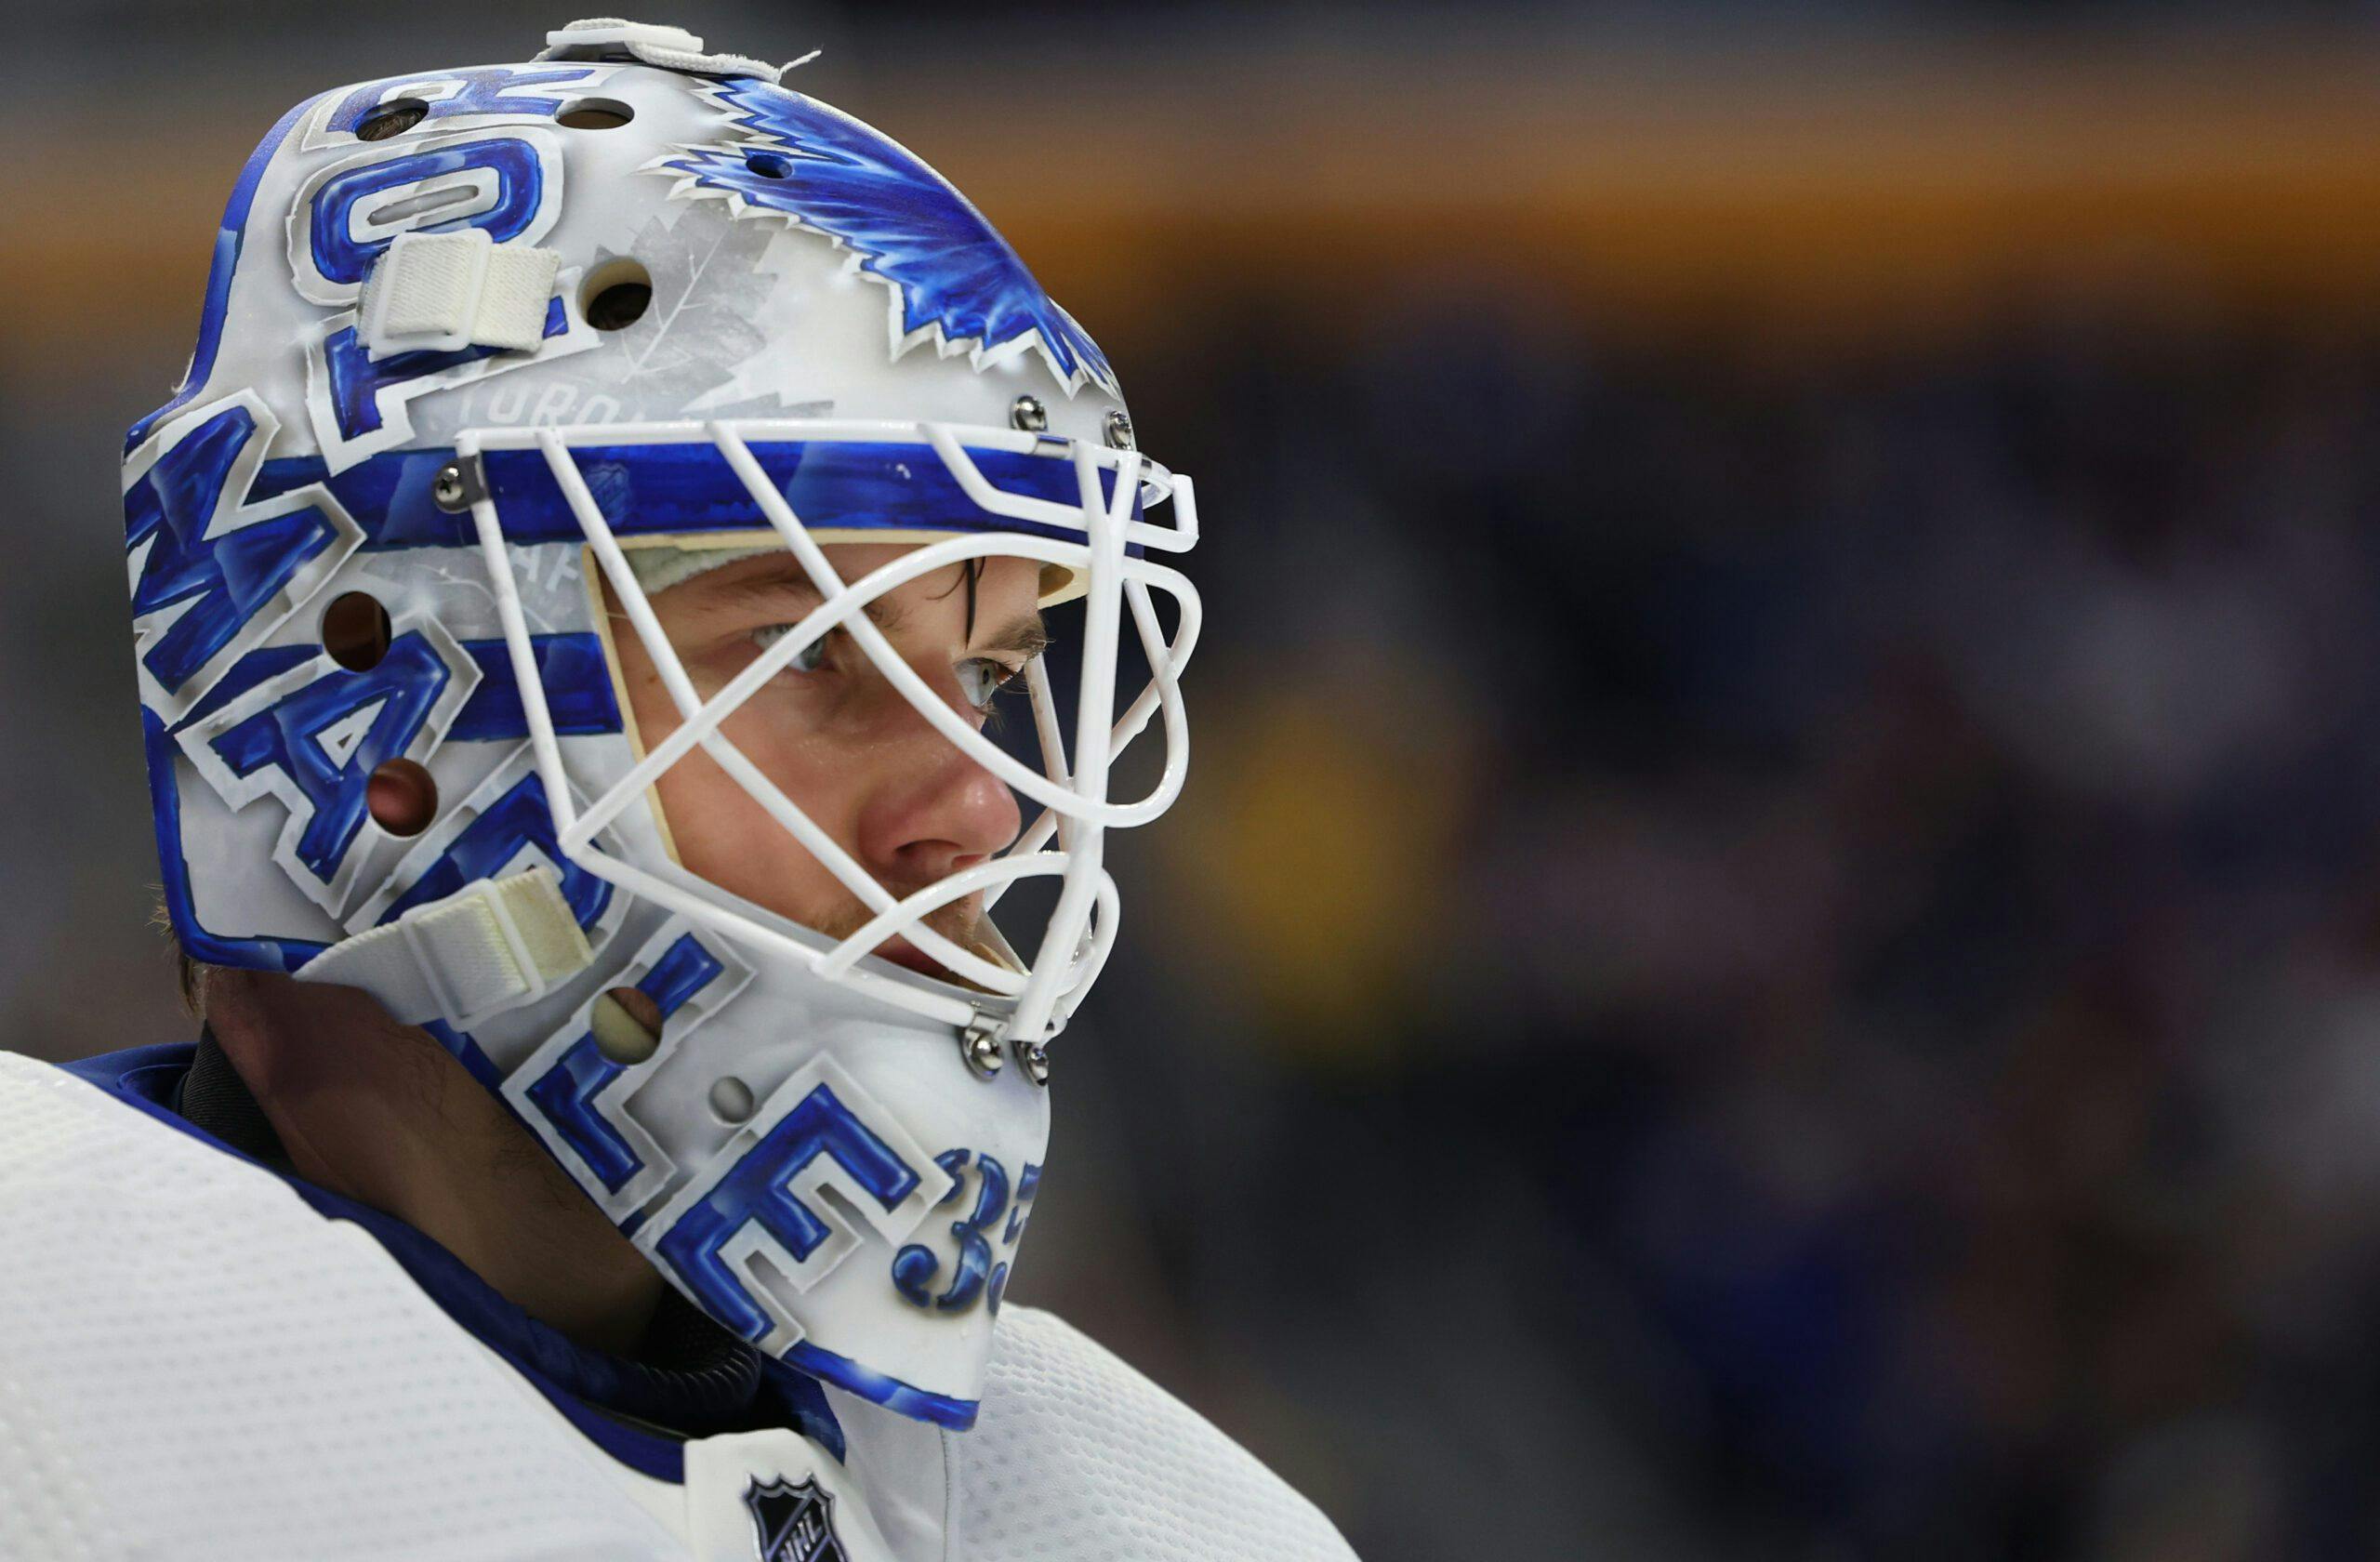 Toronto Maple Leafs’ Ilya Samsonov leaves game vs. Oilers with injury